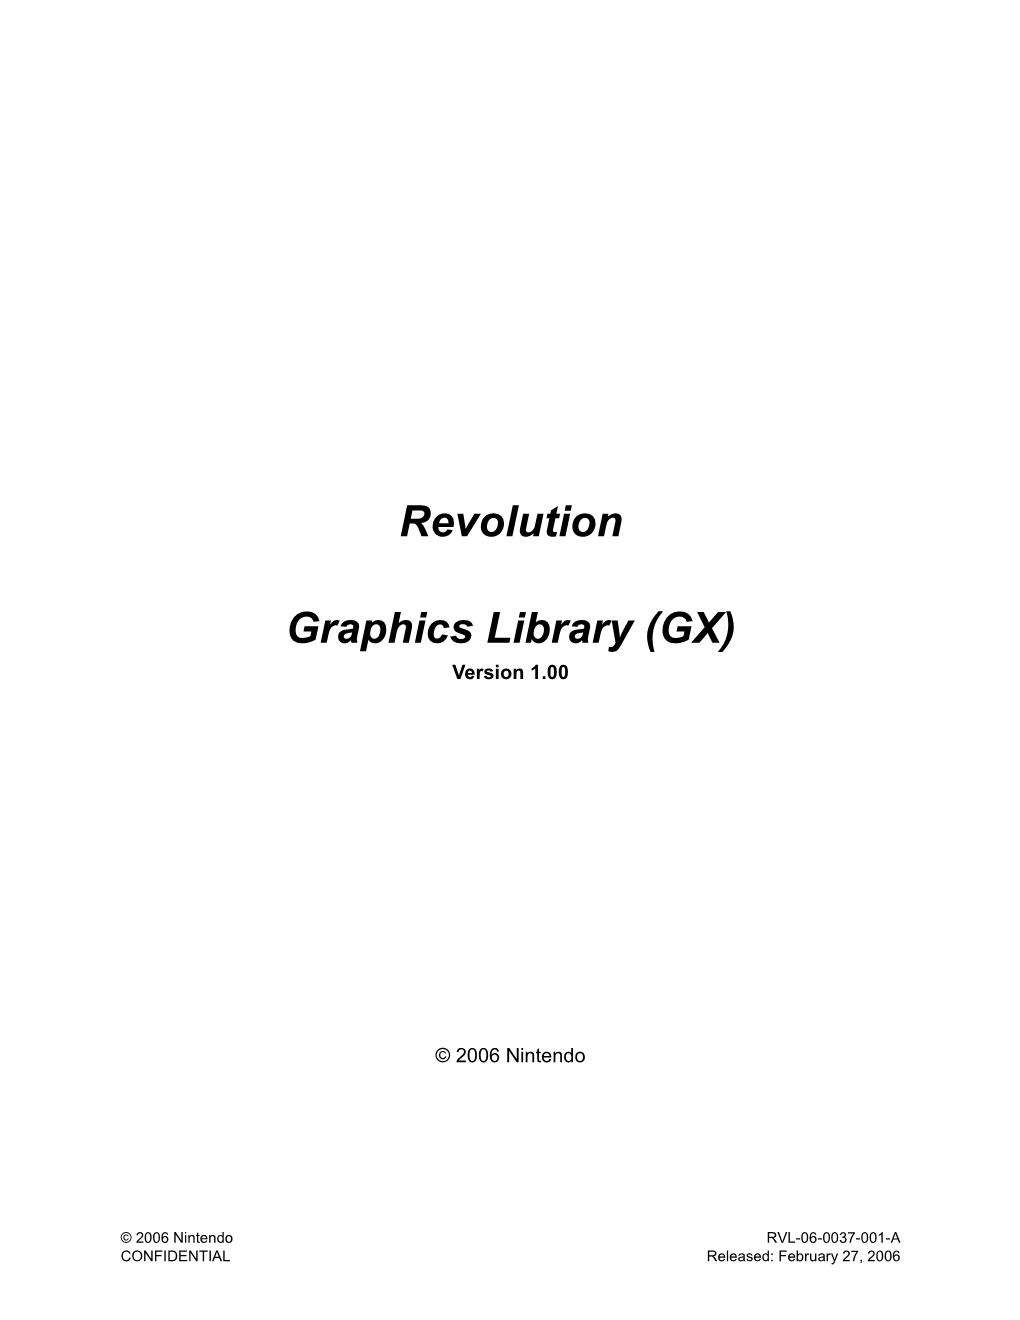 Revolution Graphics Library (GX)